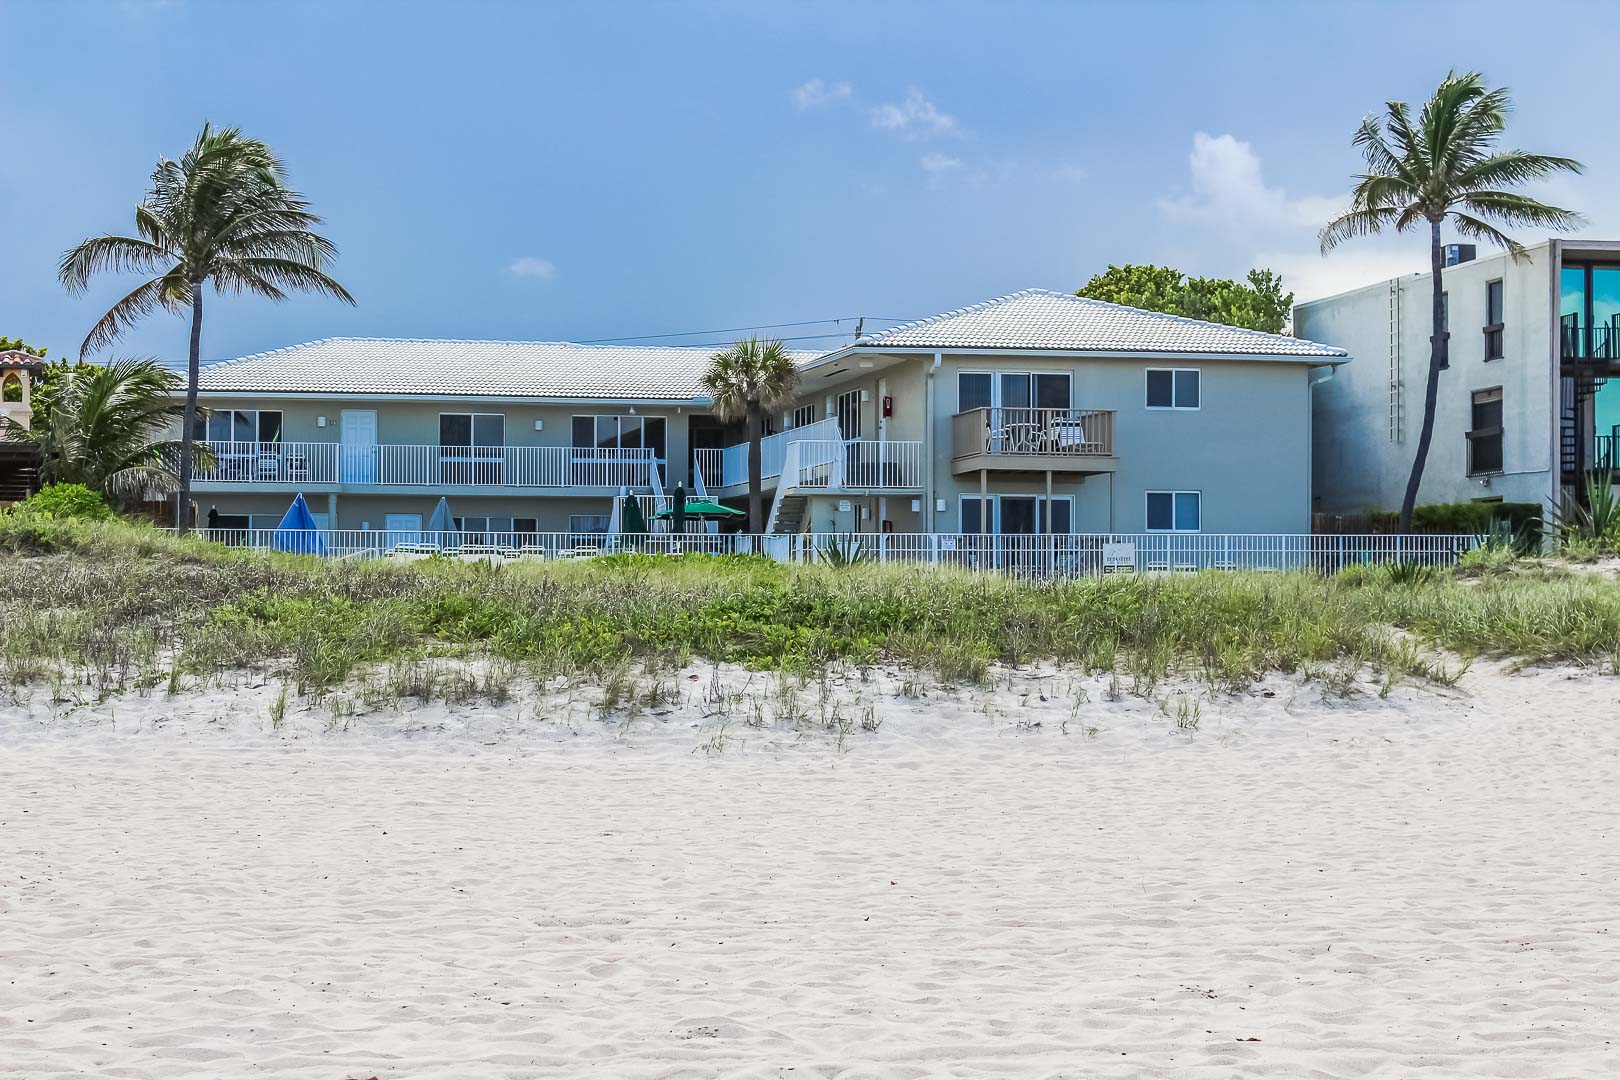 A charming view of VRI's Berkshire Beach Club in Florida